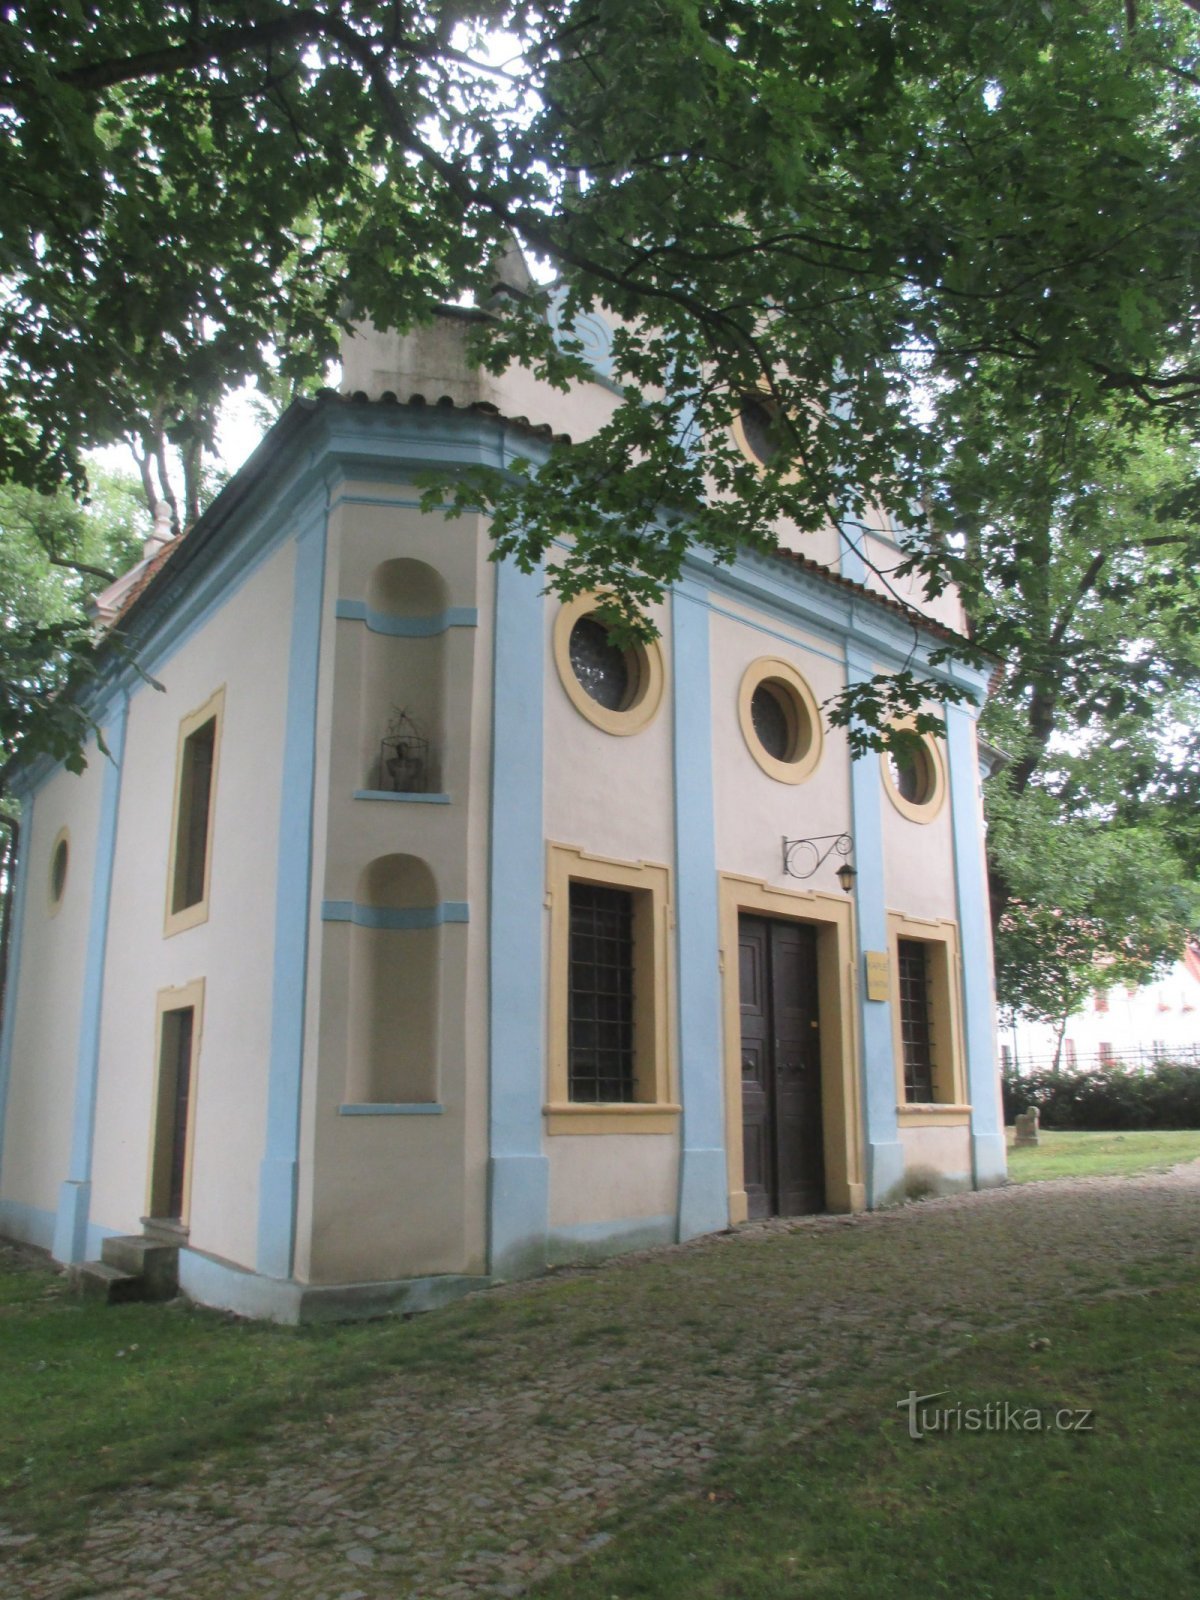 Church of St. Martin in Český Krumlov